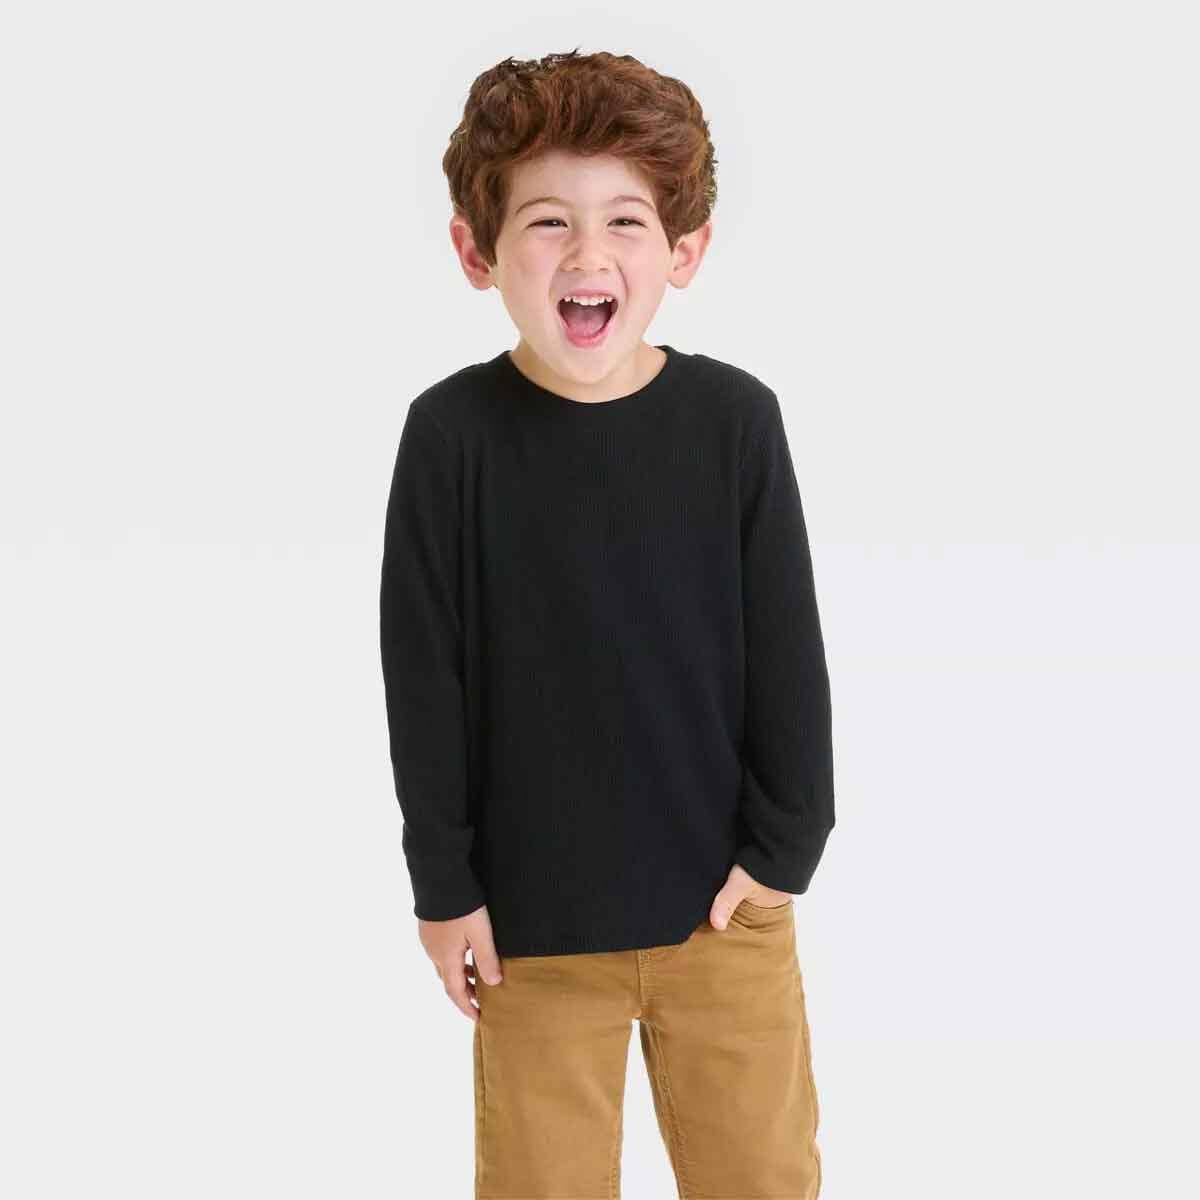 Excellent Kid's Thermal Long Sleeve Winter Knit Wear Shirt Boy's Sweat Shirt SRL Black 18 (6-9 Months) 